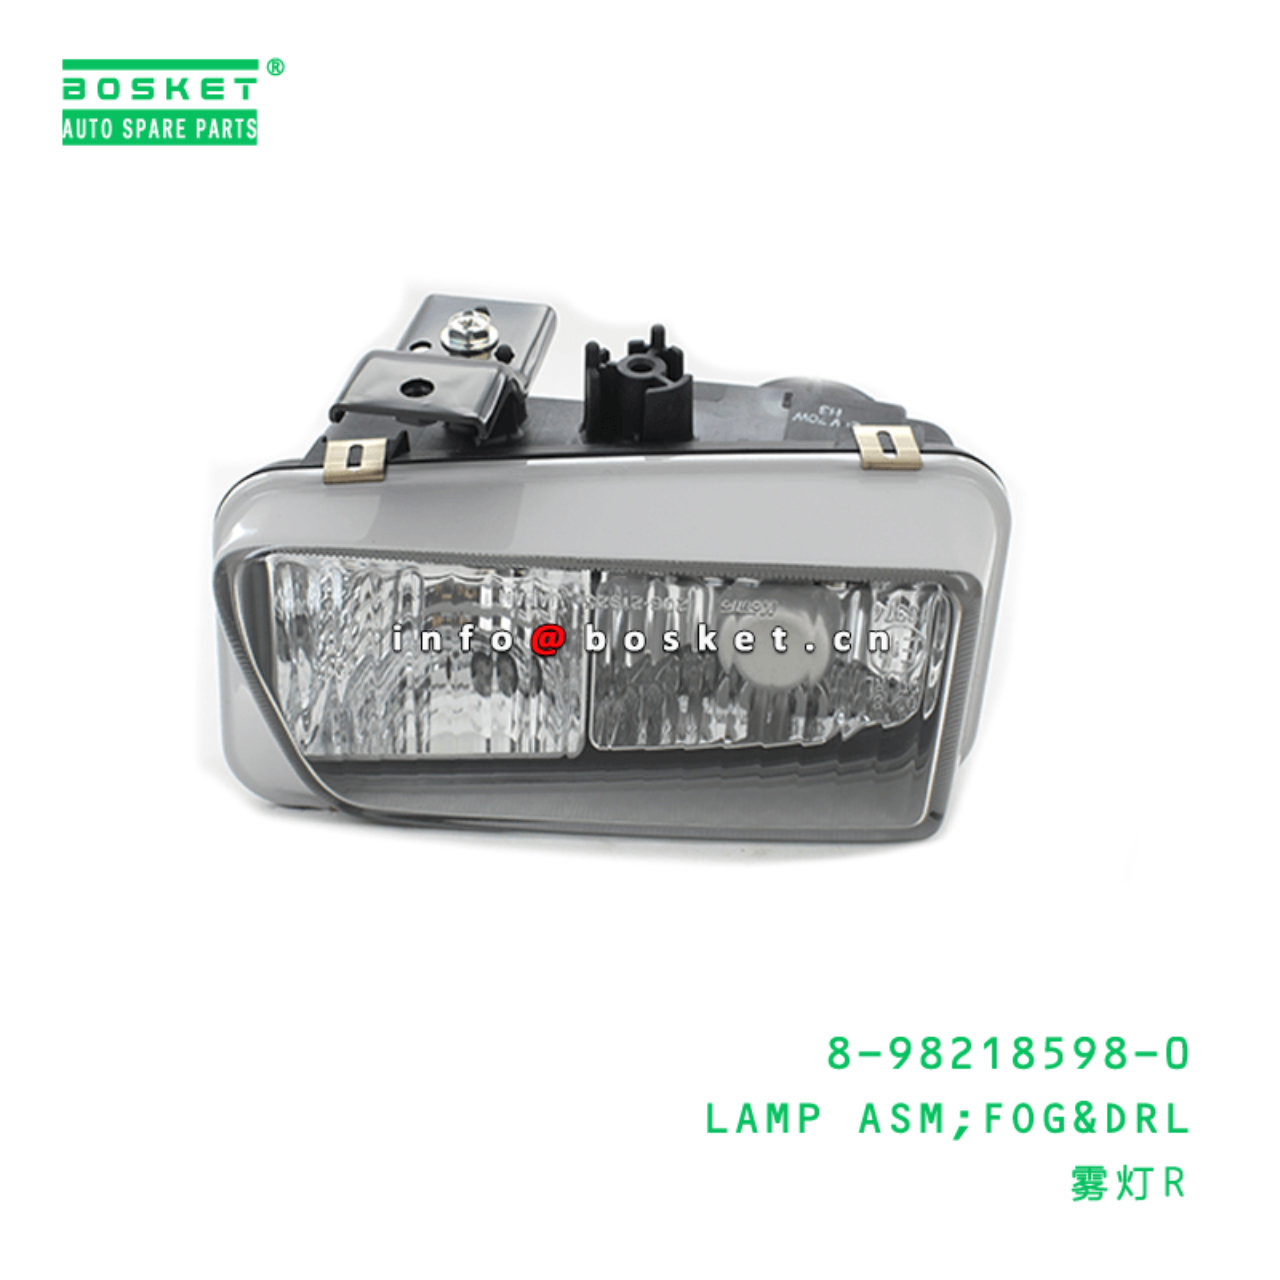 8-98218598-0 Fog&Drl Lamp Assembly Suitable for ISUZU FRR 